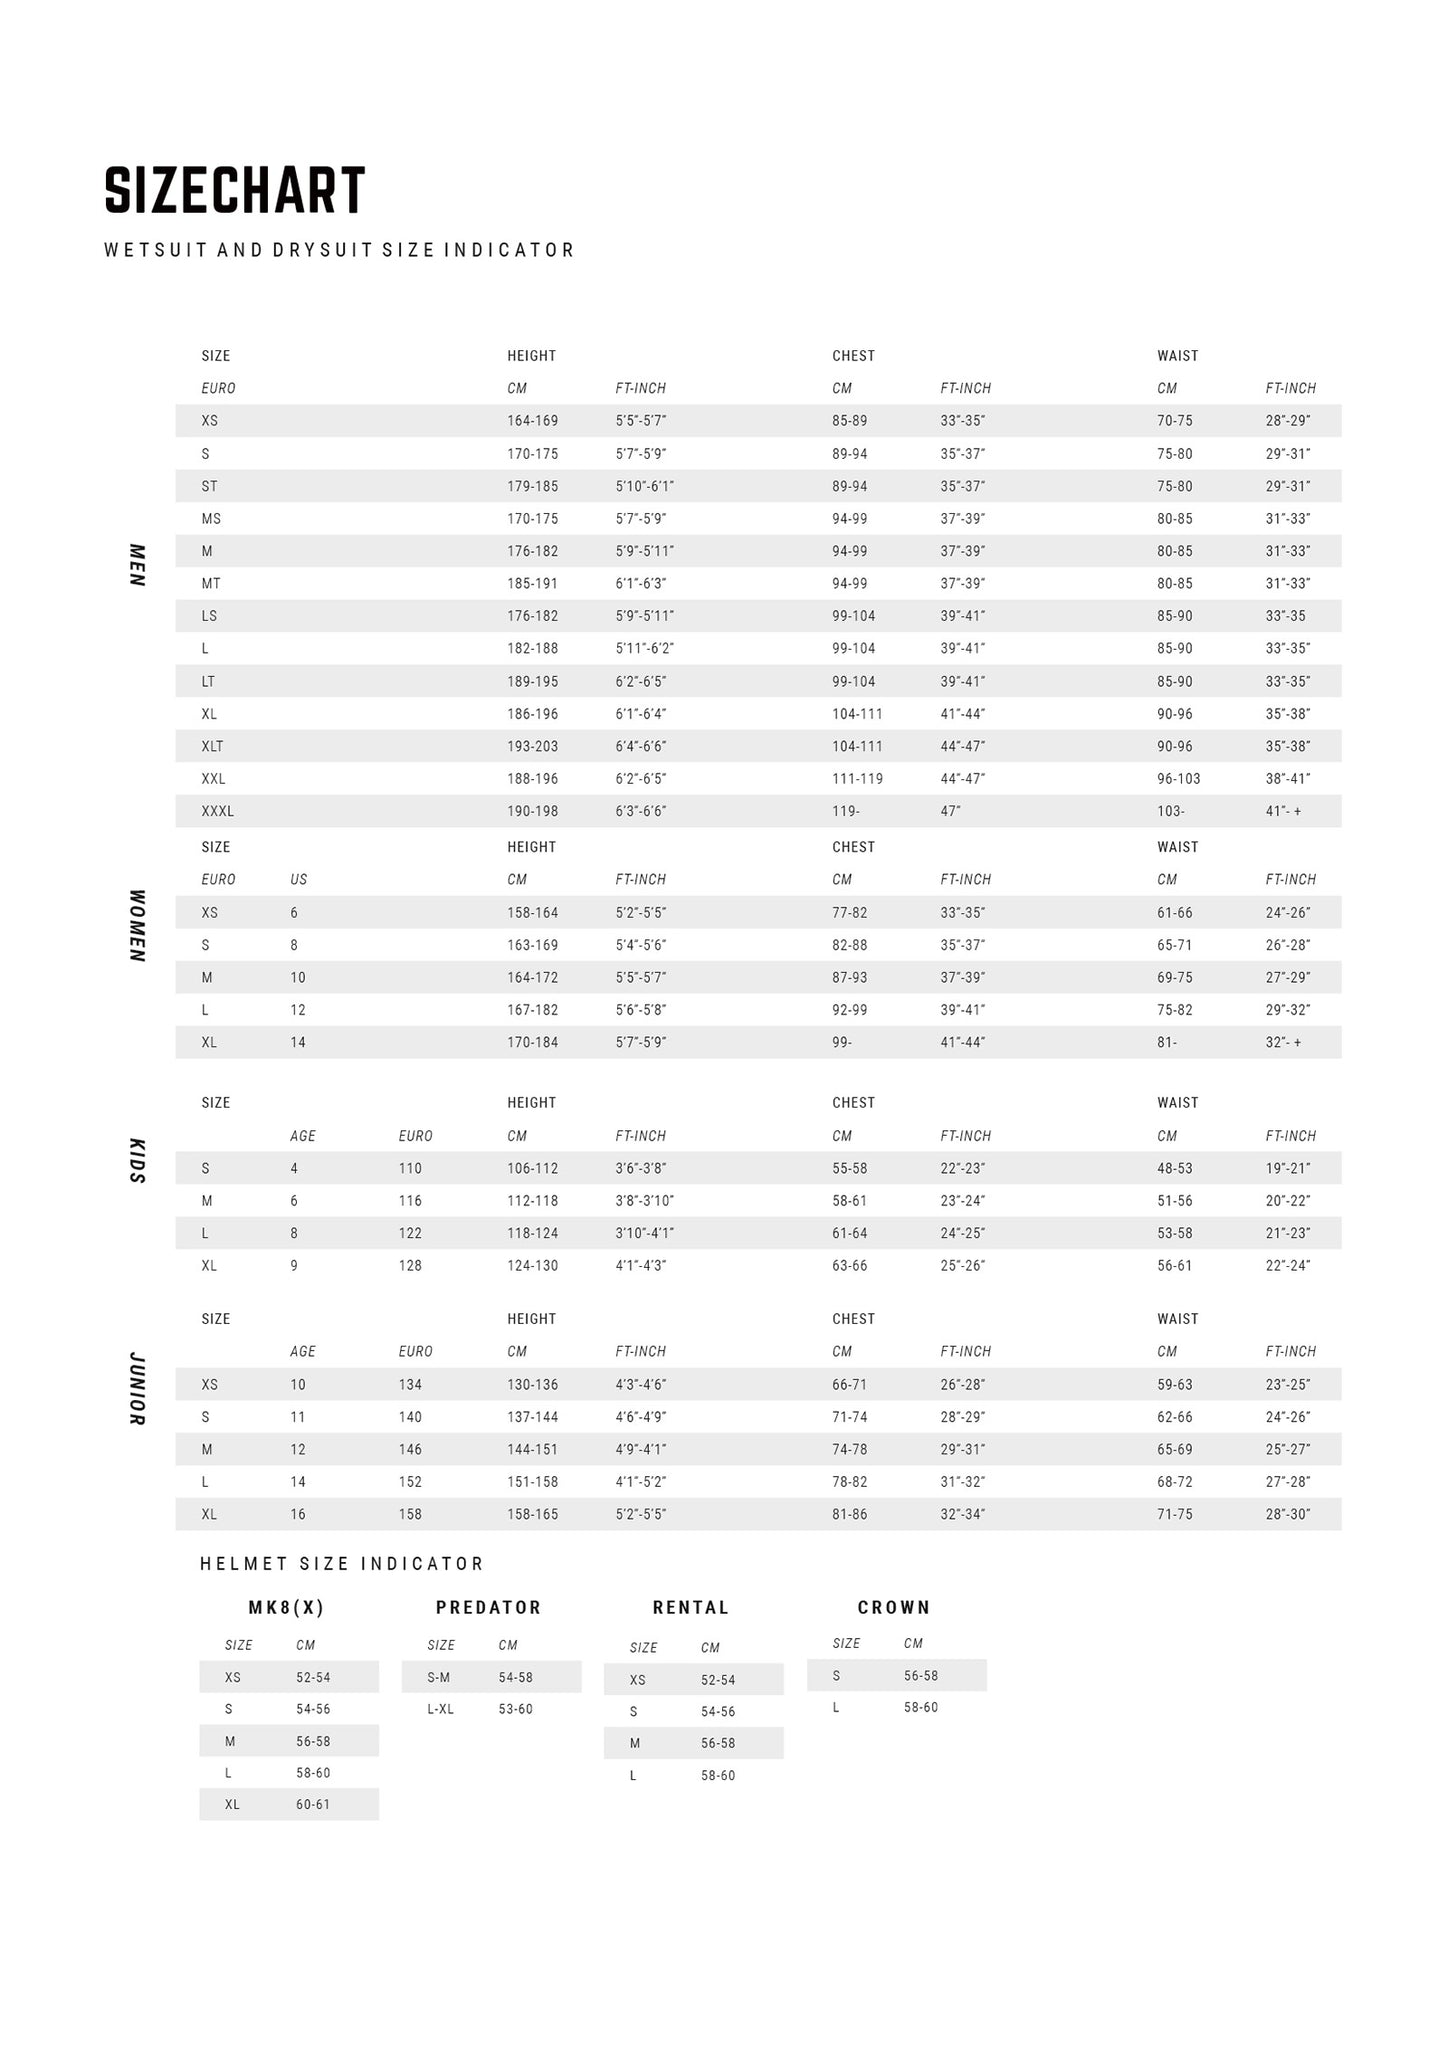 Nike® Apparel Size Charts